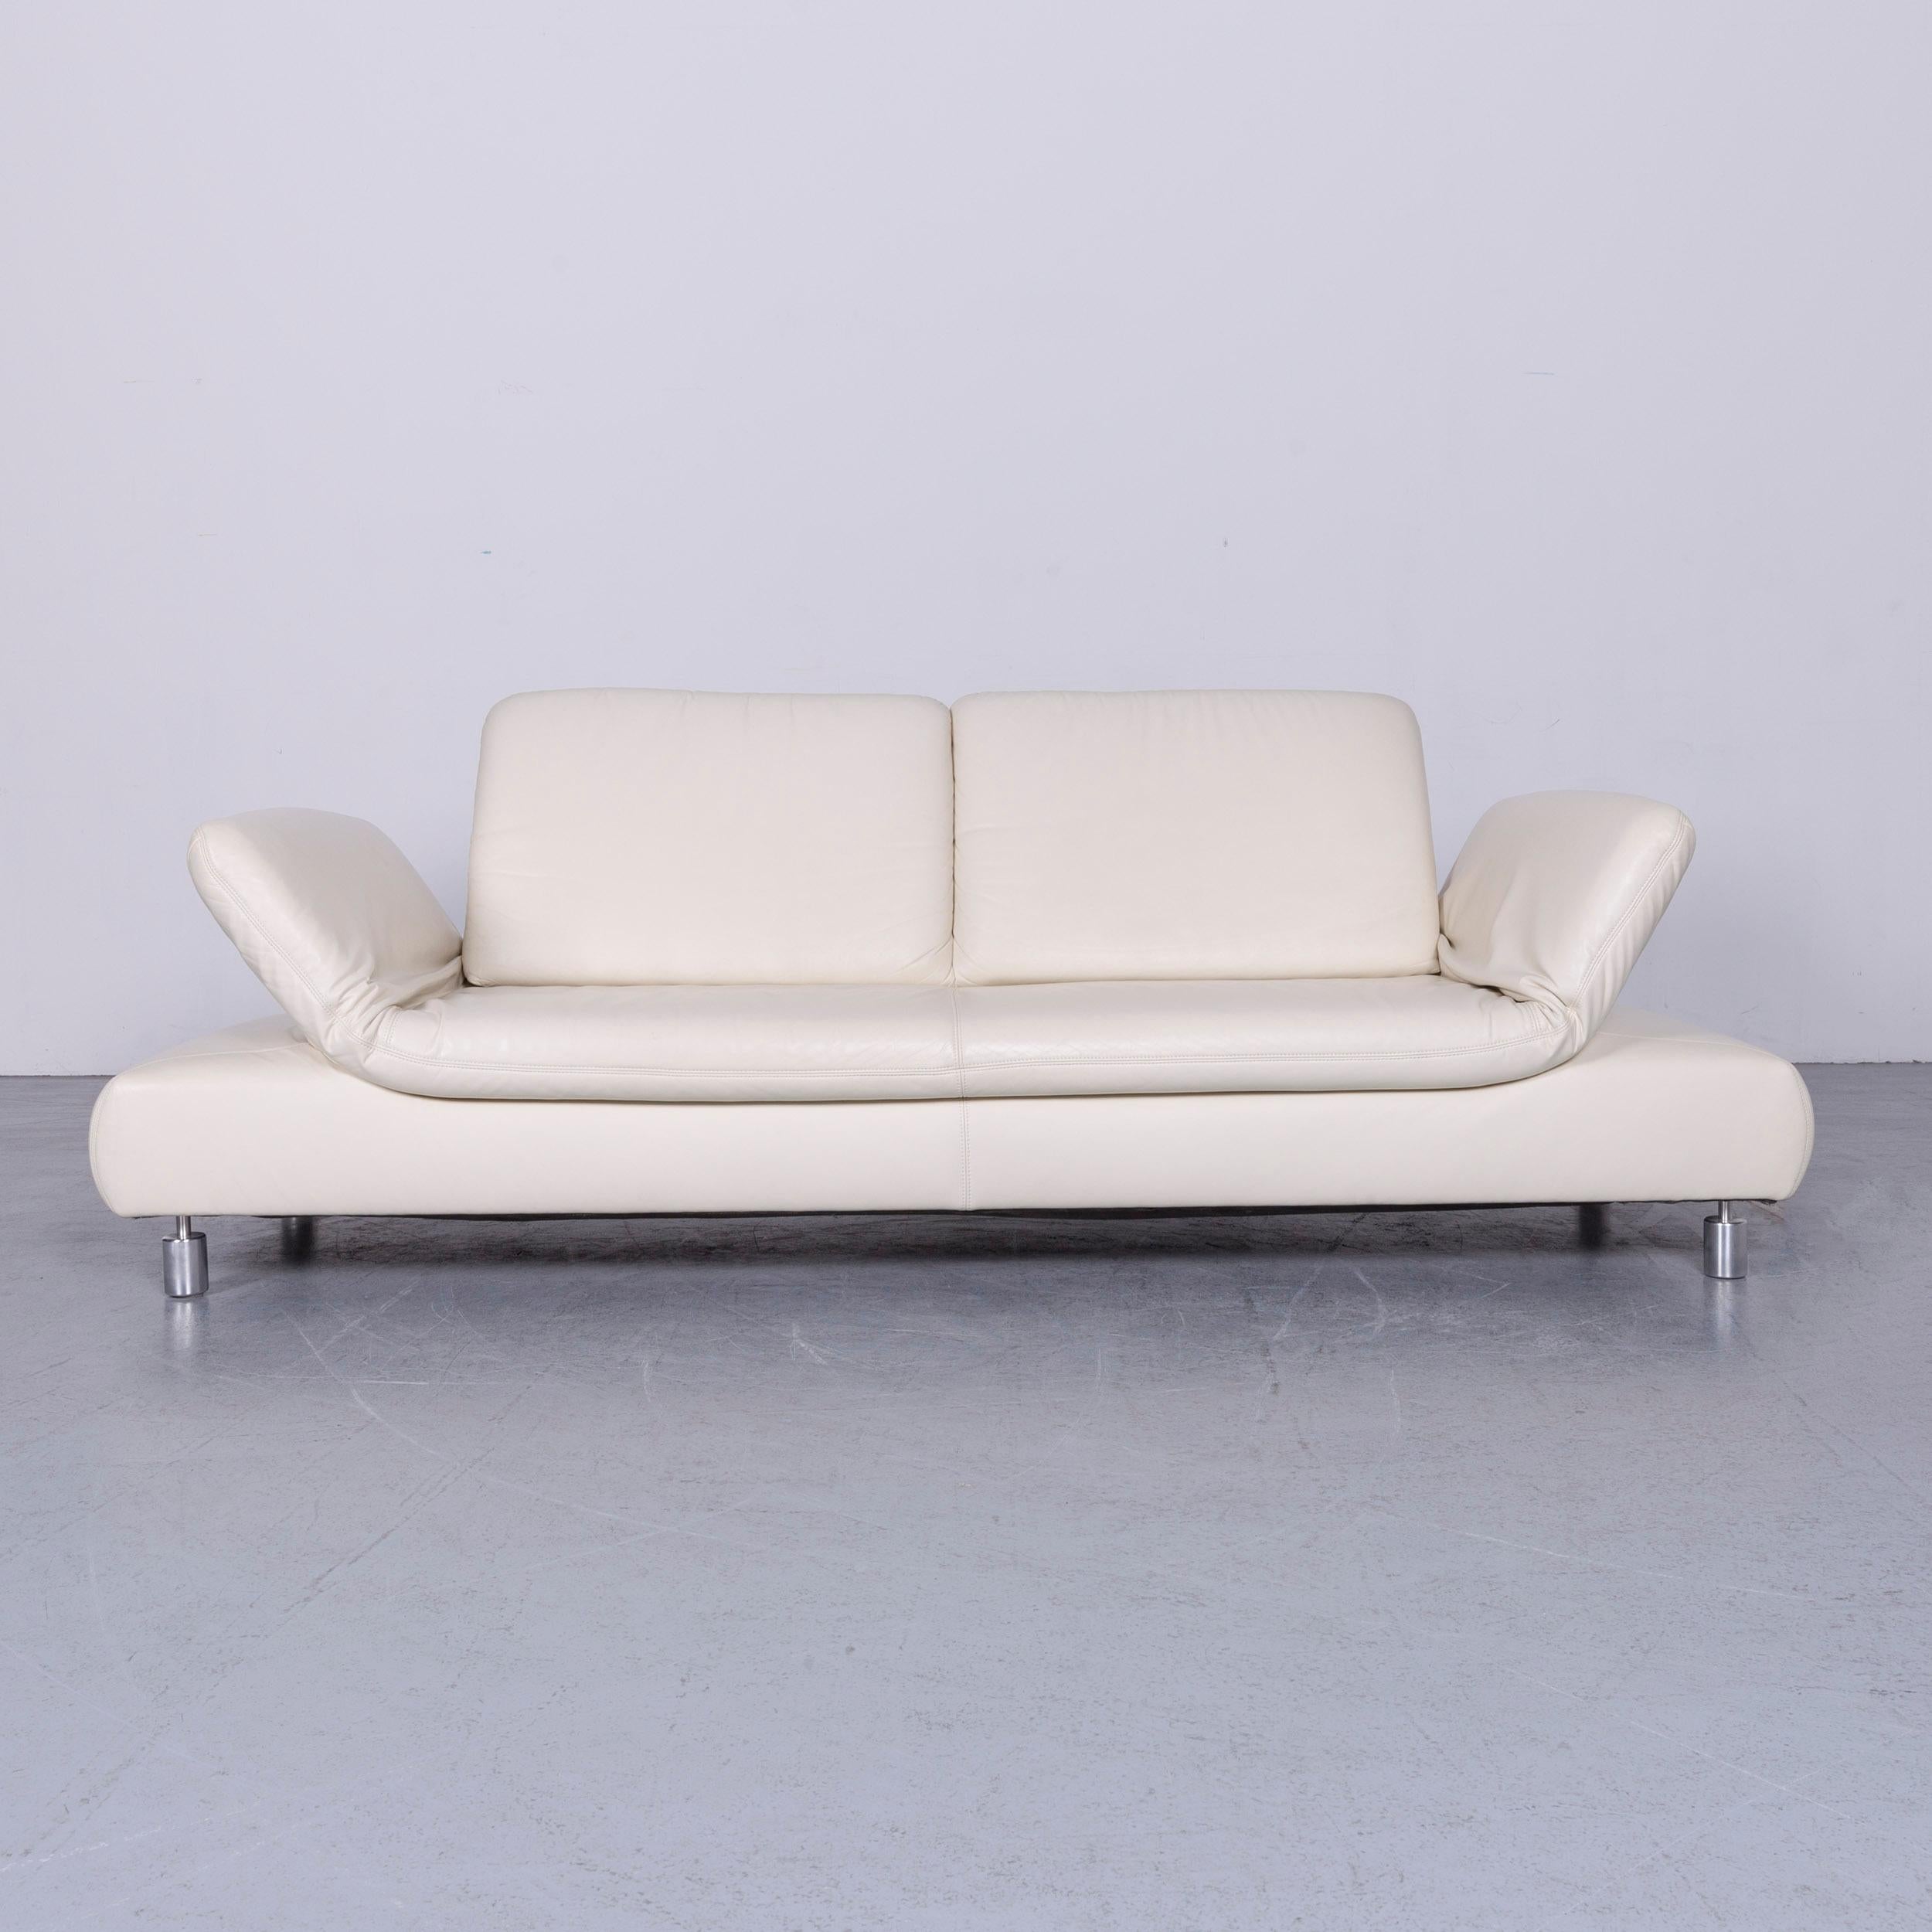 German Koinor Rivoli Designer Leather Three-Seat Sofa in White with Functions